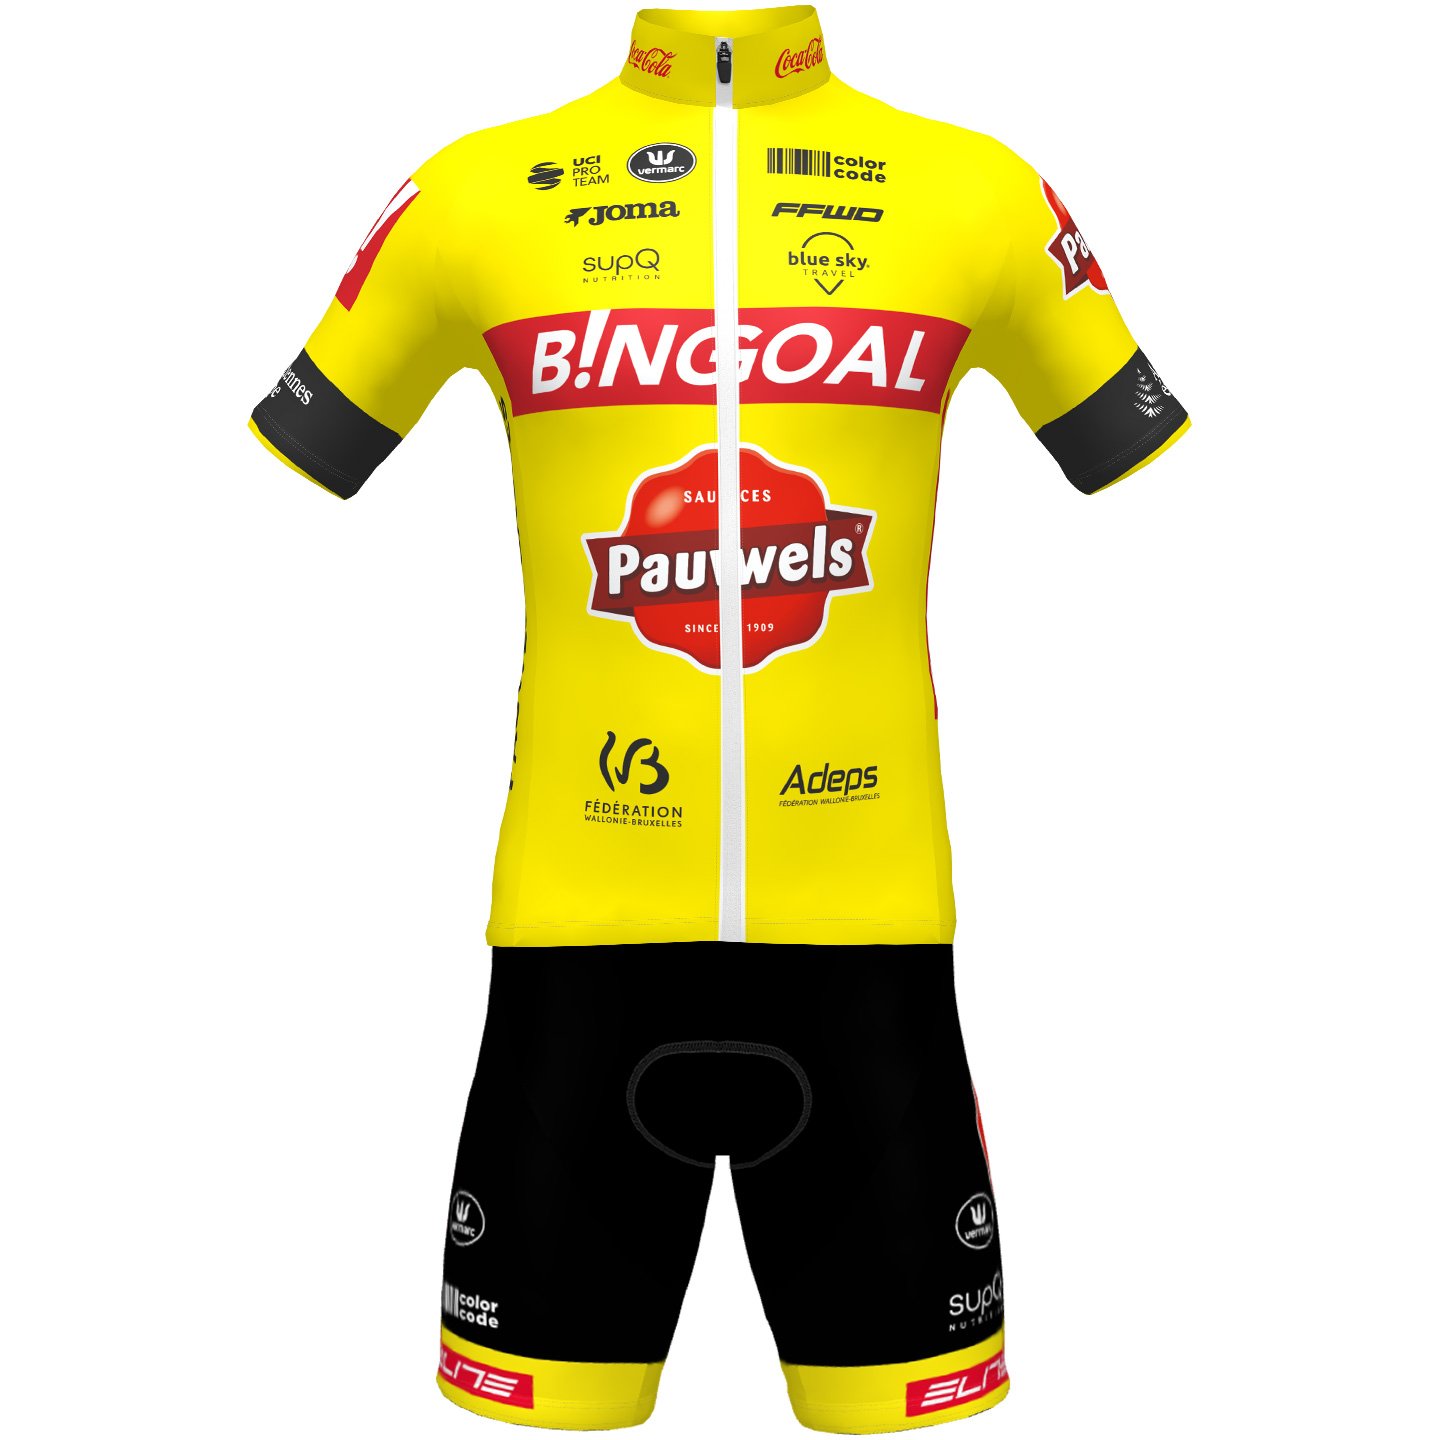 BINGOAL PAUWELS SAUCES WB 2022 Set (cycling jersey + cycling shorts) Set (2 pieces), for men, Cycling clothing